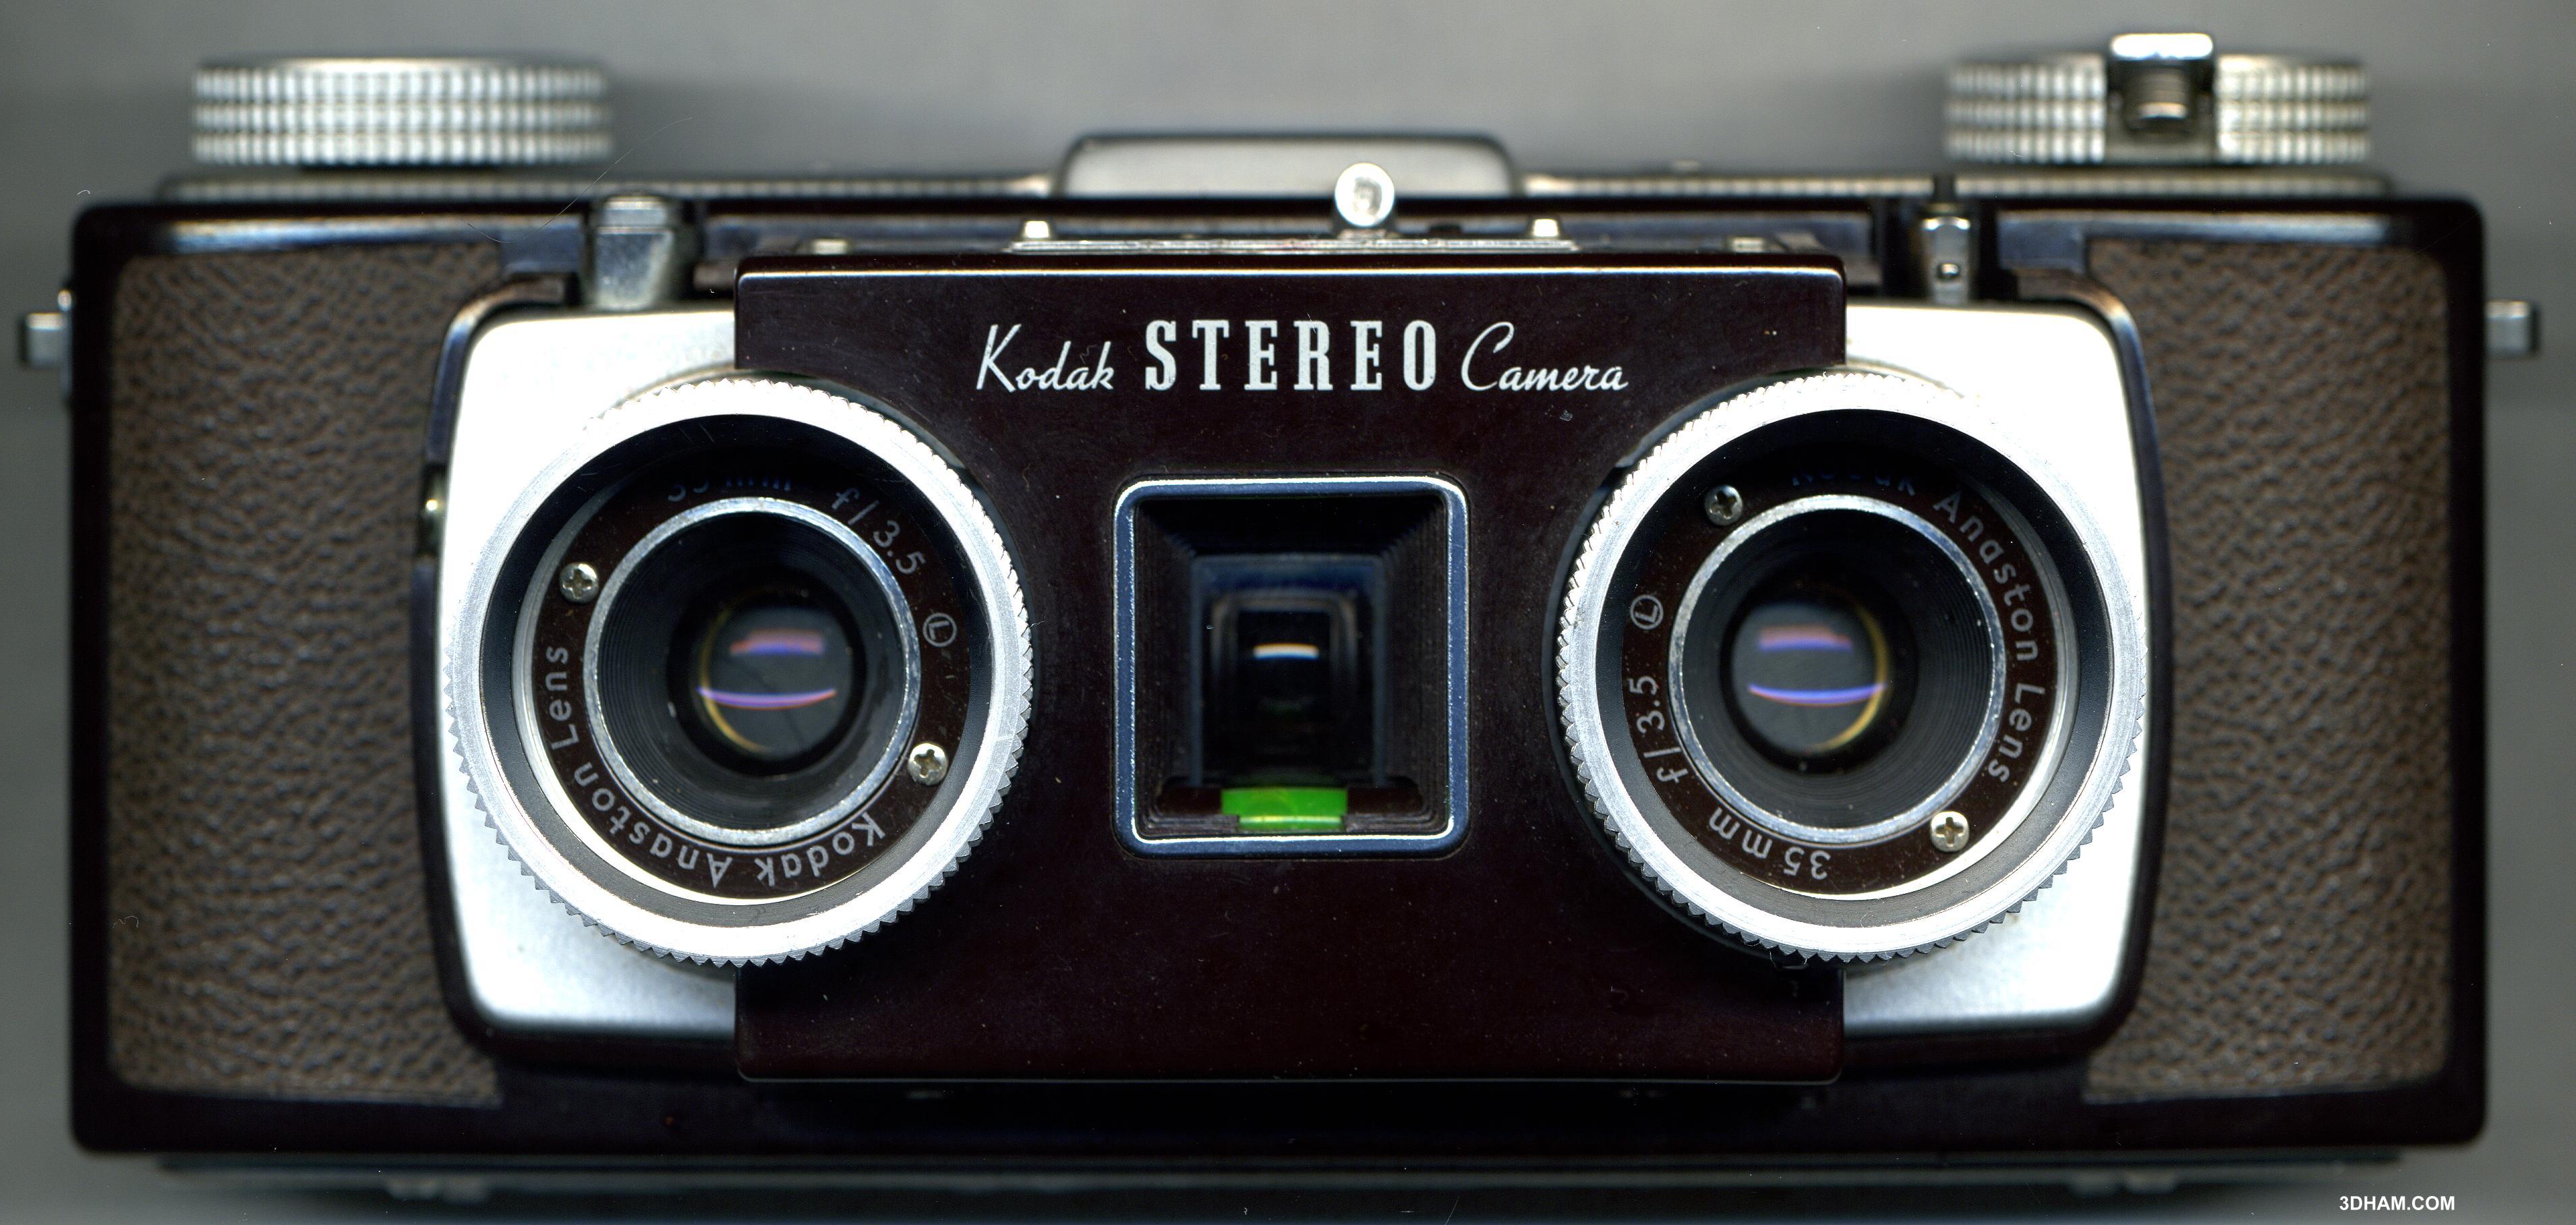 360 camera buying guide - Stereoscopic camera